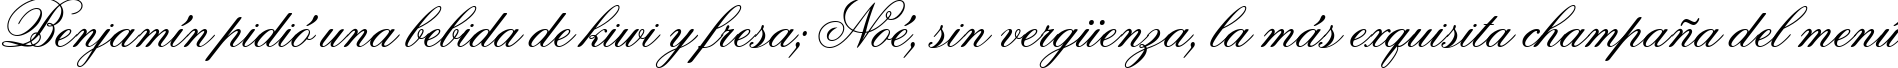 Пример написания шрифтом Ouverture script текста на испанском